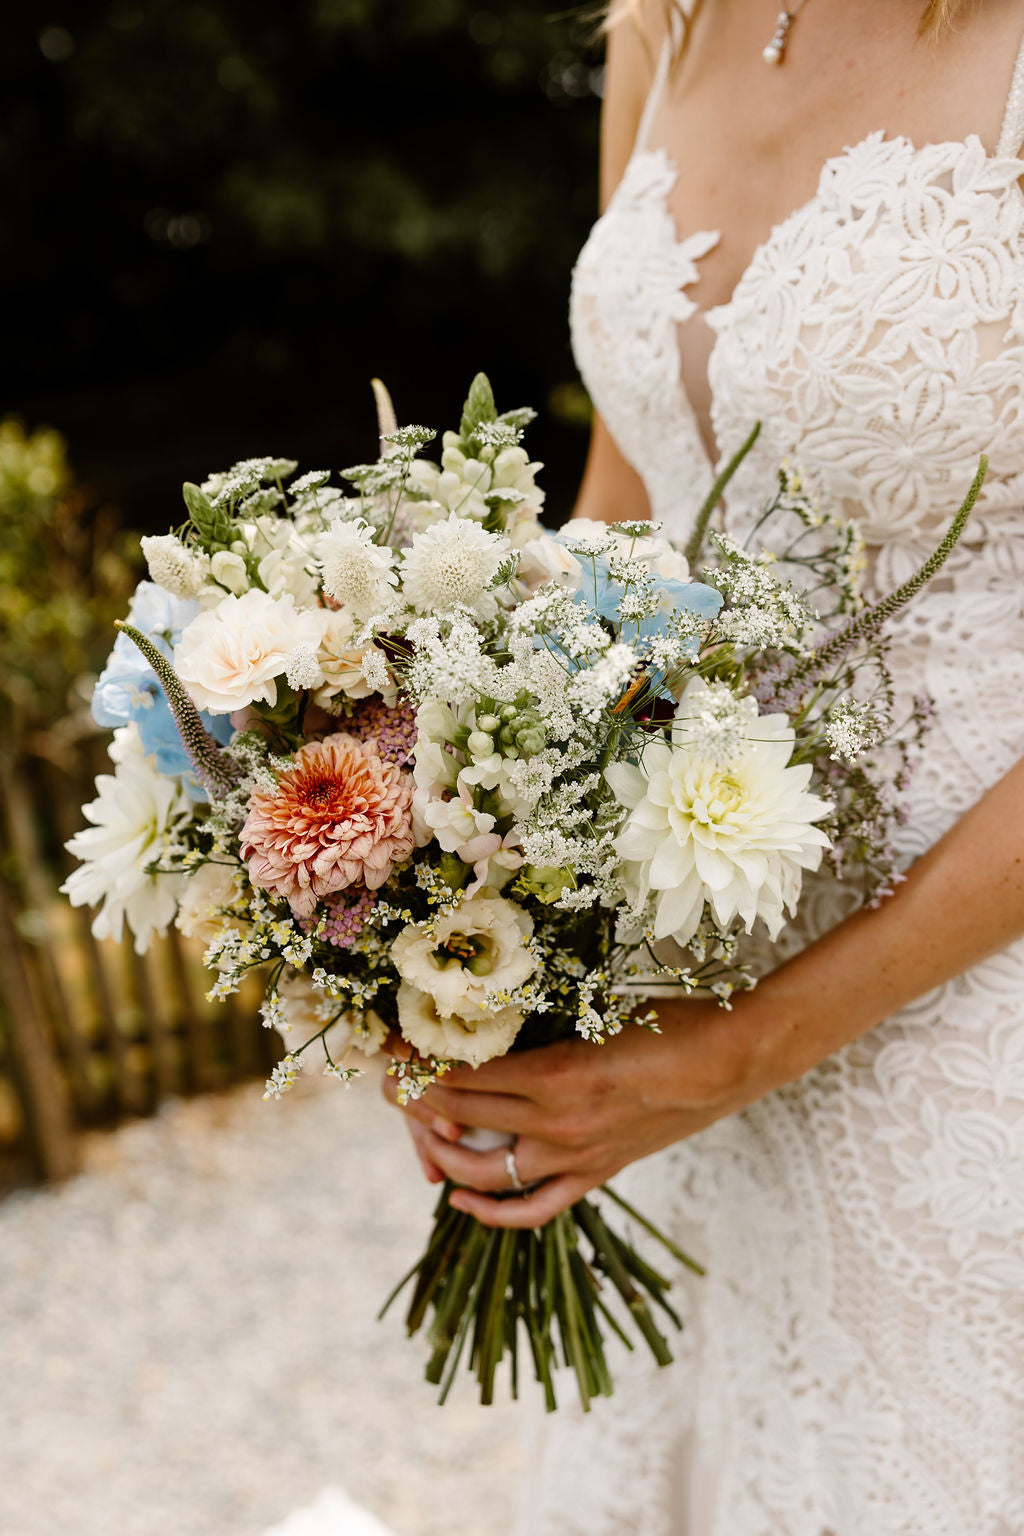 Bridal bouquet and wedding dress at Trevenna barns